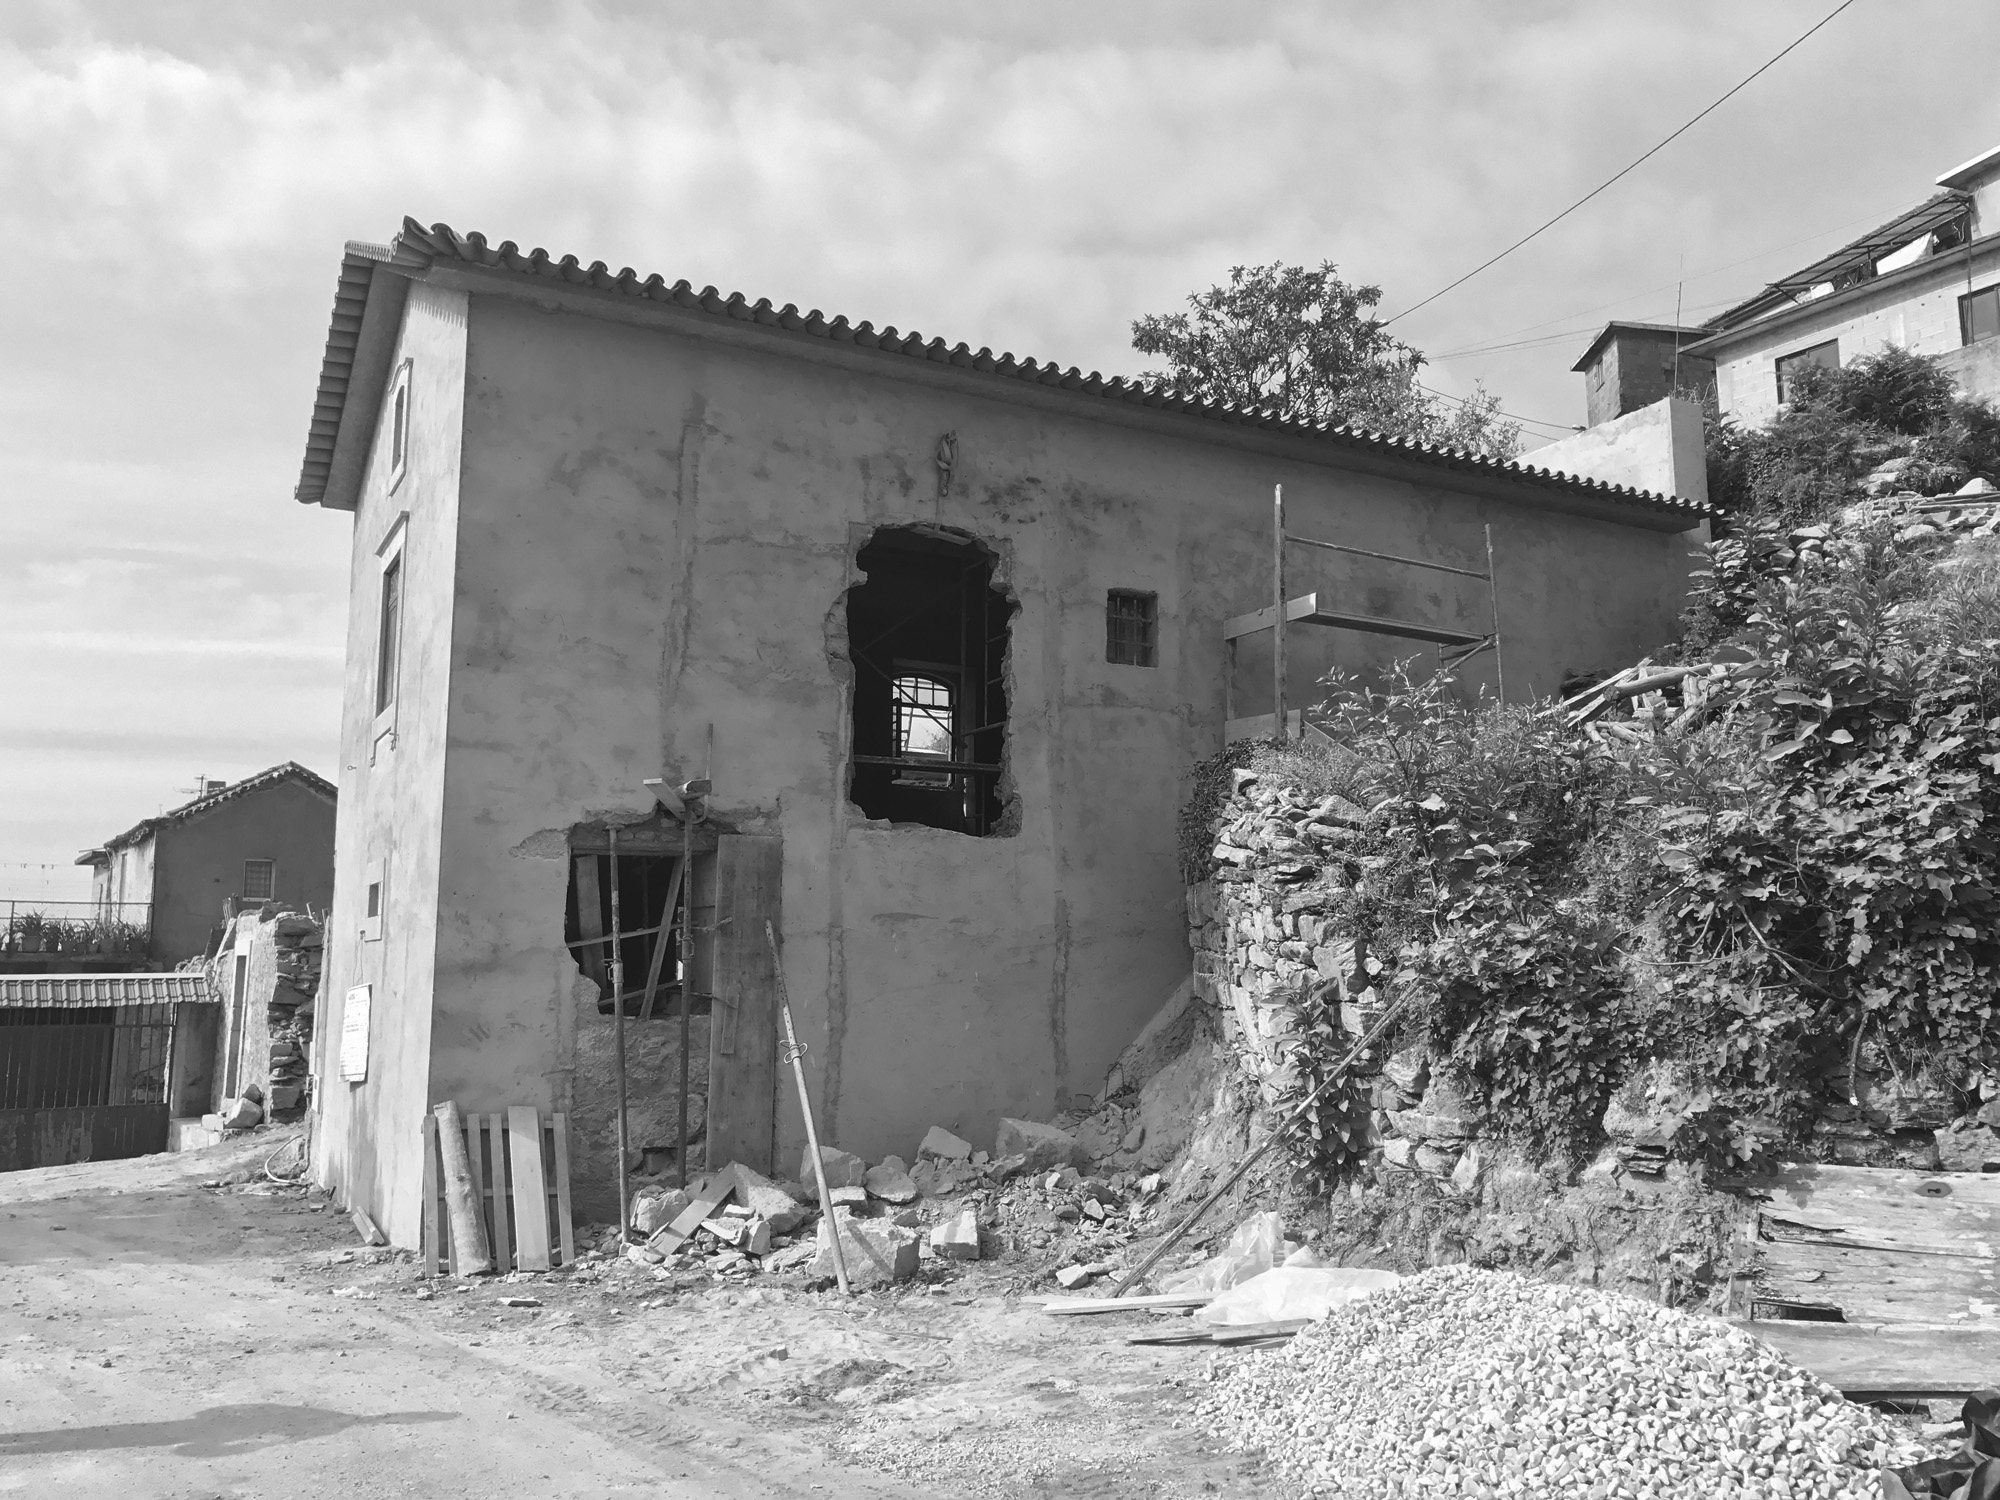 Moradia Folgorosa - Vale de Cambra - EVA atelier - Arquitectura - Obra - Arquitecto - Porto - EVA evolutionary architecture (1).jpg